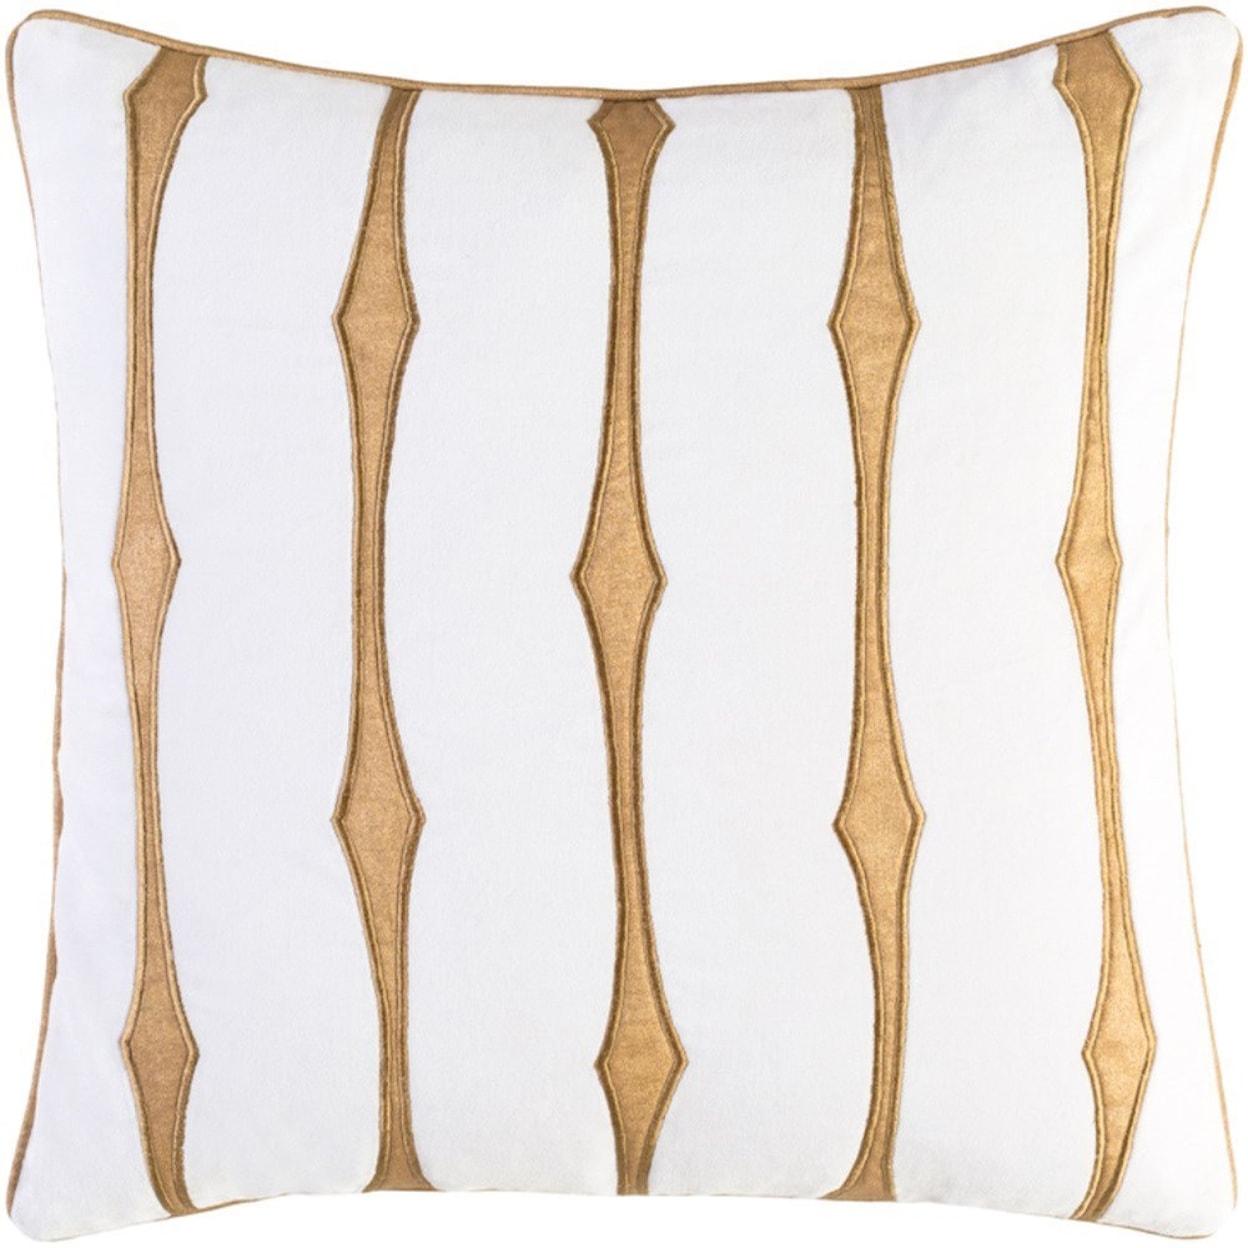 Surya Graphic Stripe Pillow